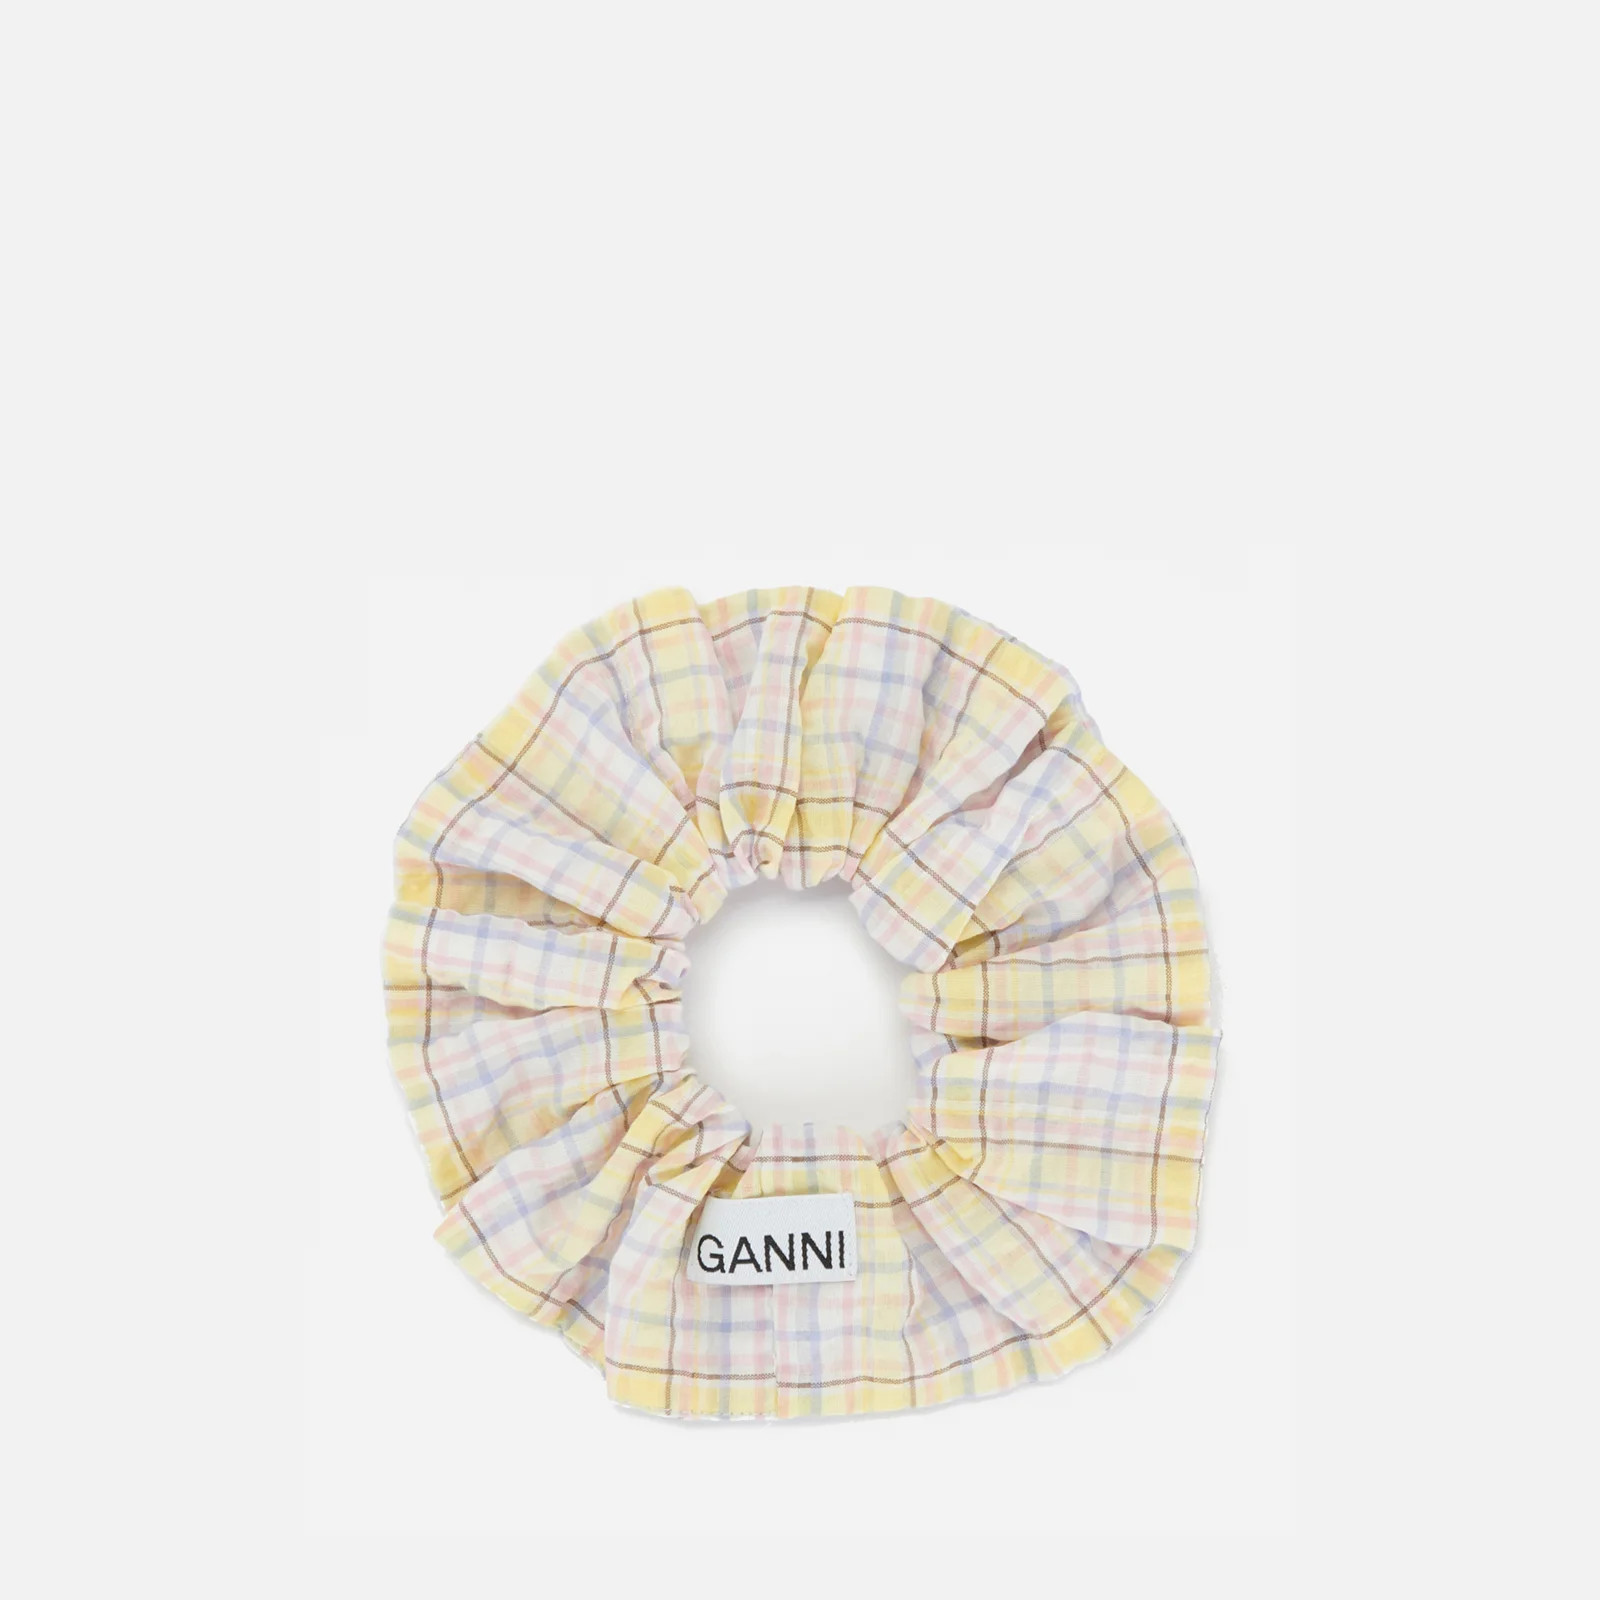 Ganni Women's Seersucker Check Scrunchie - Multi Colour Image 1